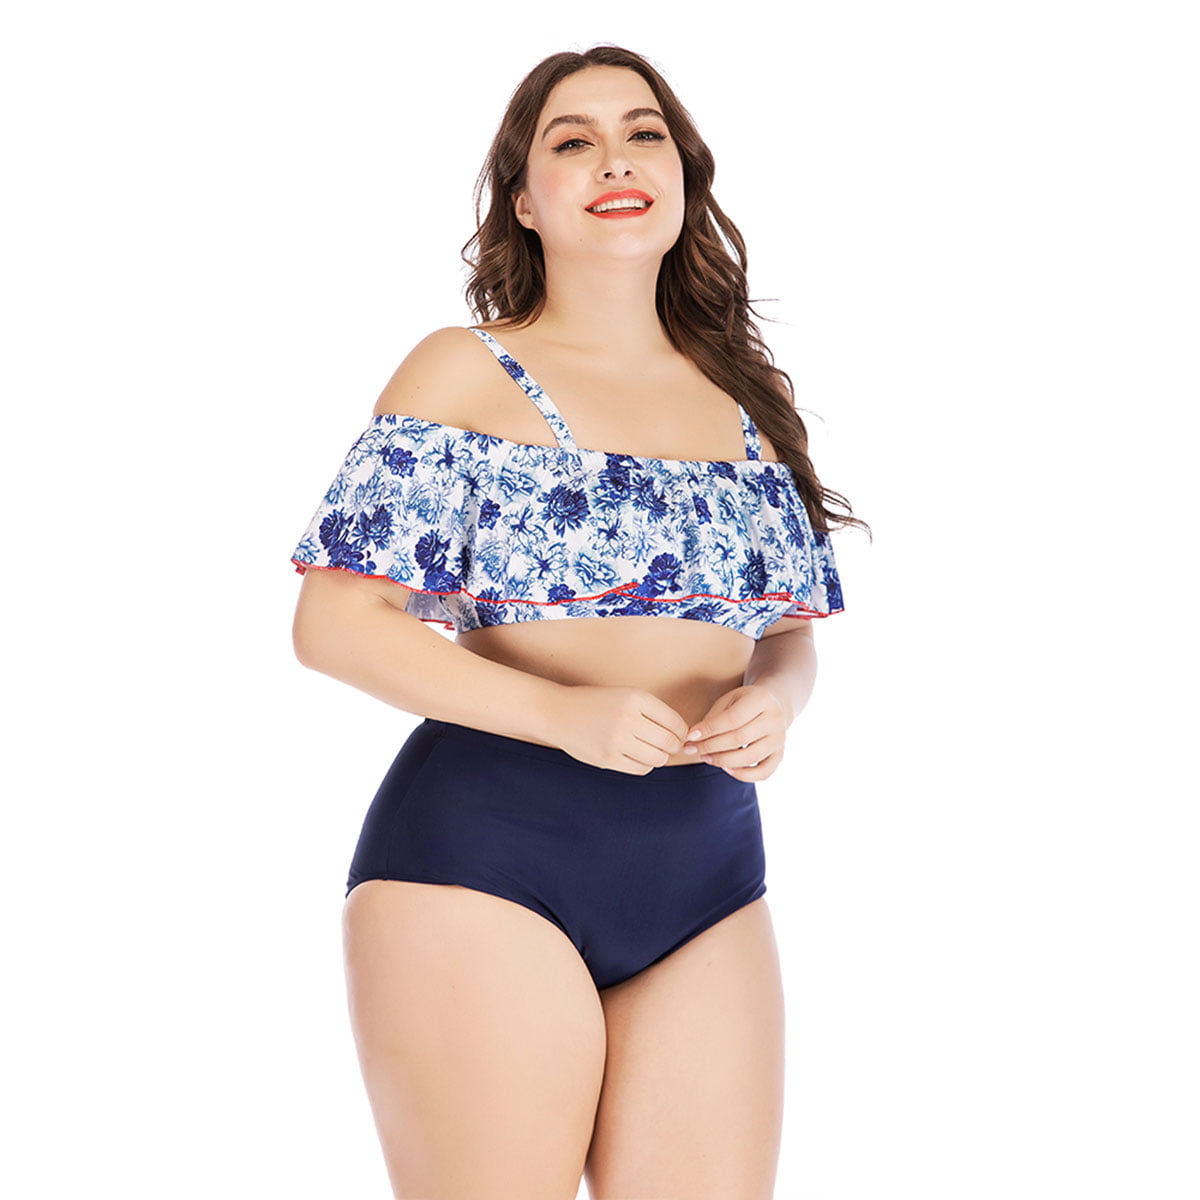 Women Tankini Swimsuits Halter Athletic Bathing Suit V NeckTop Ruched Bottom Slimming Plus Size Girls Swimwear